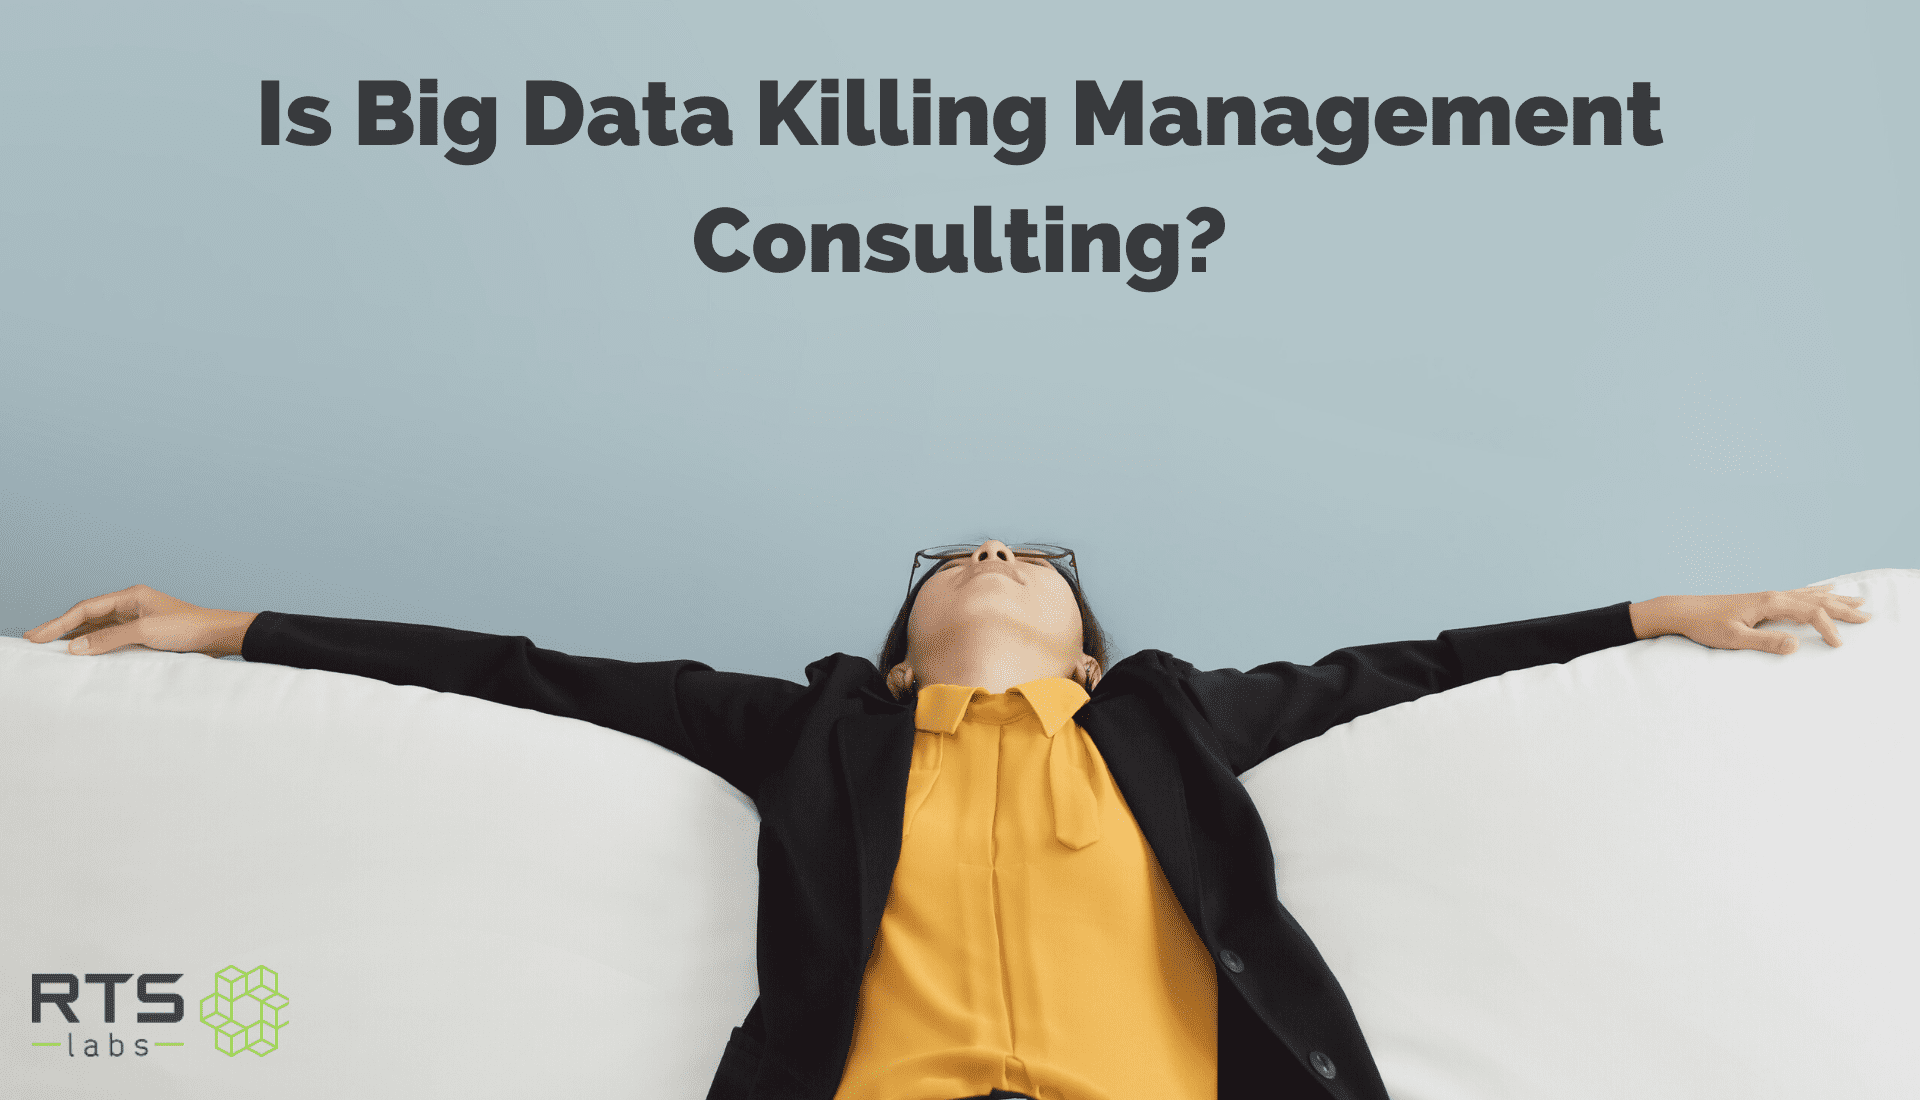 Big Data Killing Management Consulting